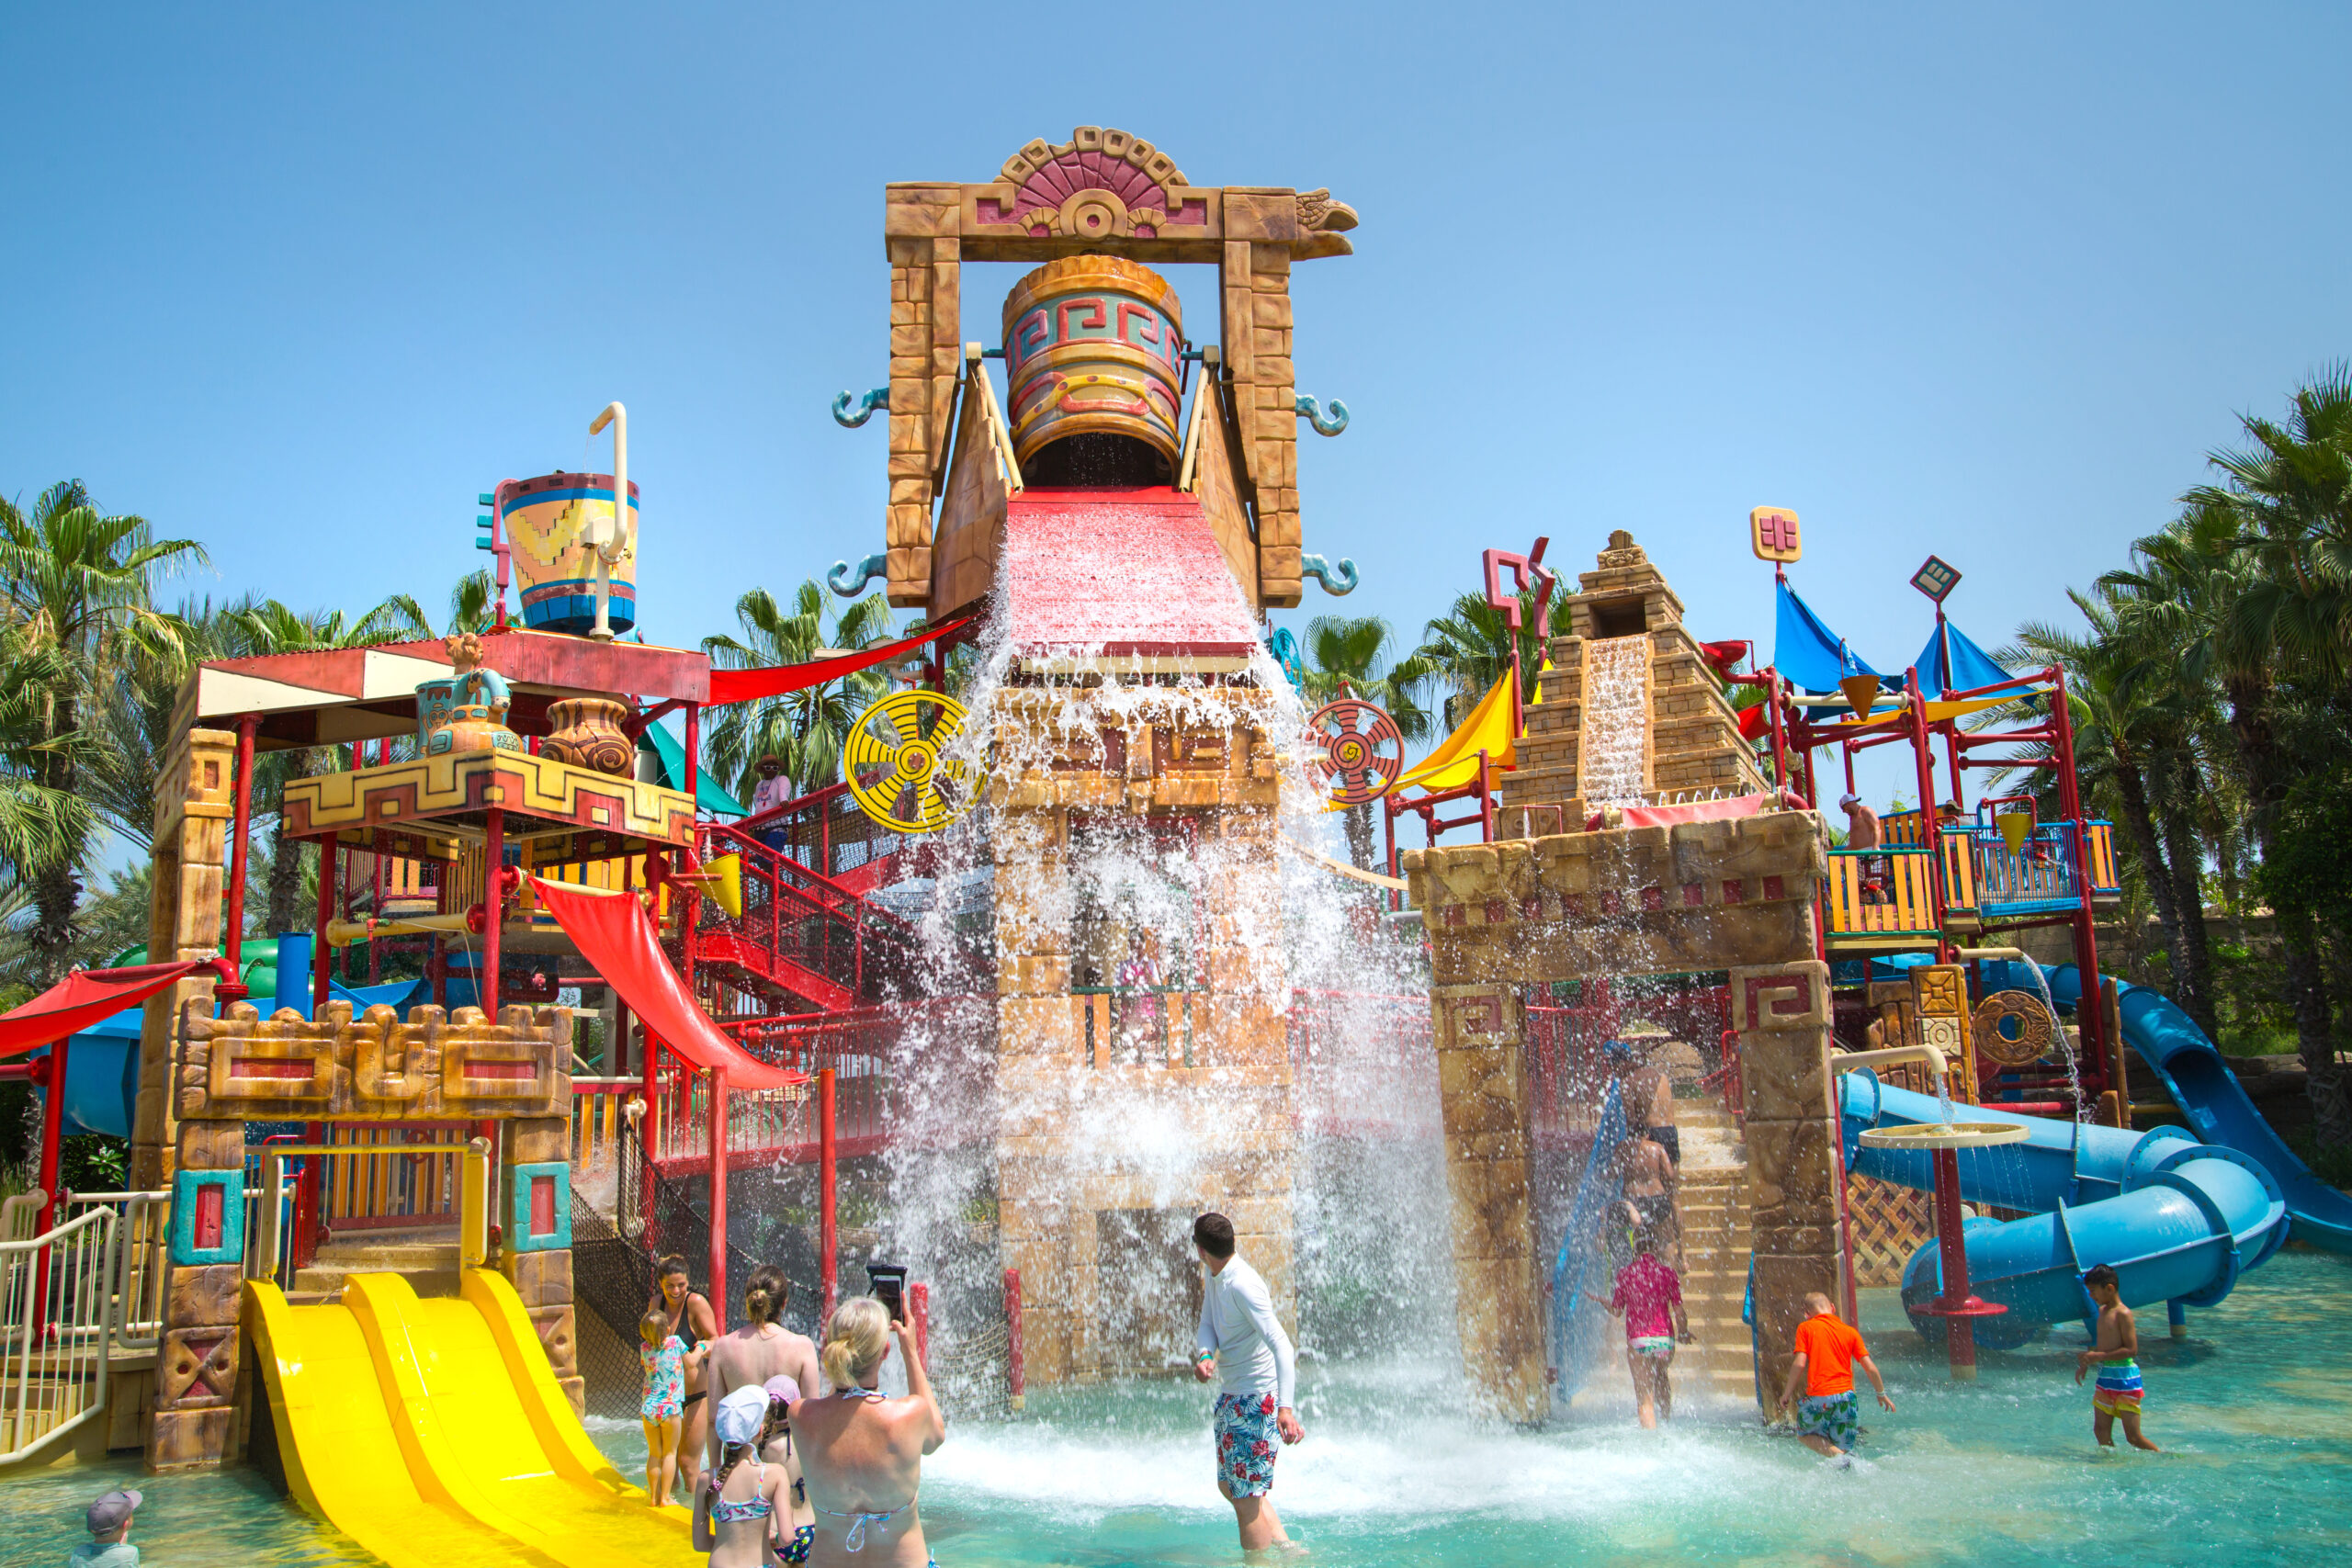 Aquaventure Waterpark Dubai - Splasher's Kids Area